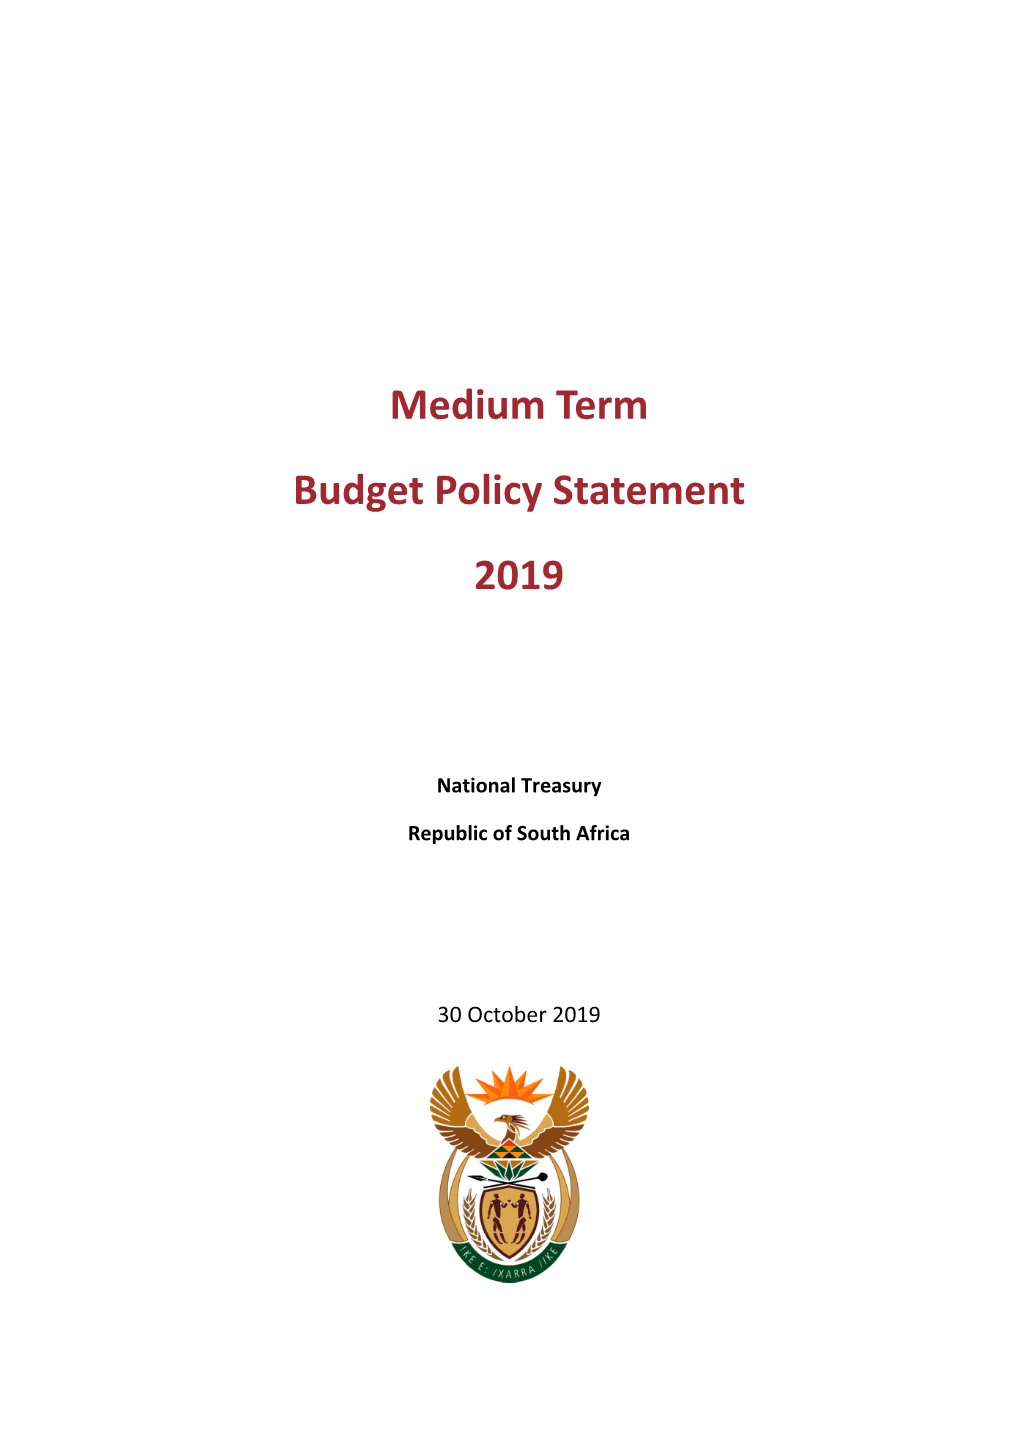 Medium Term Budget Policy Statement 2019